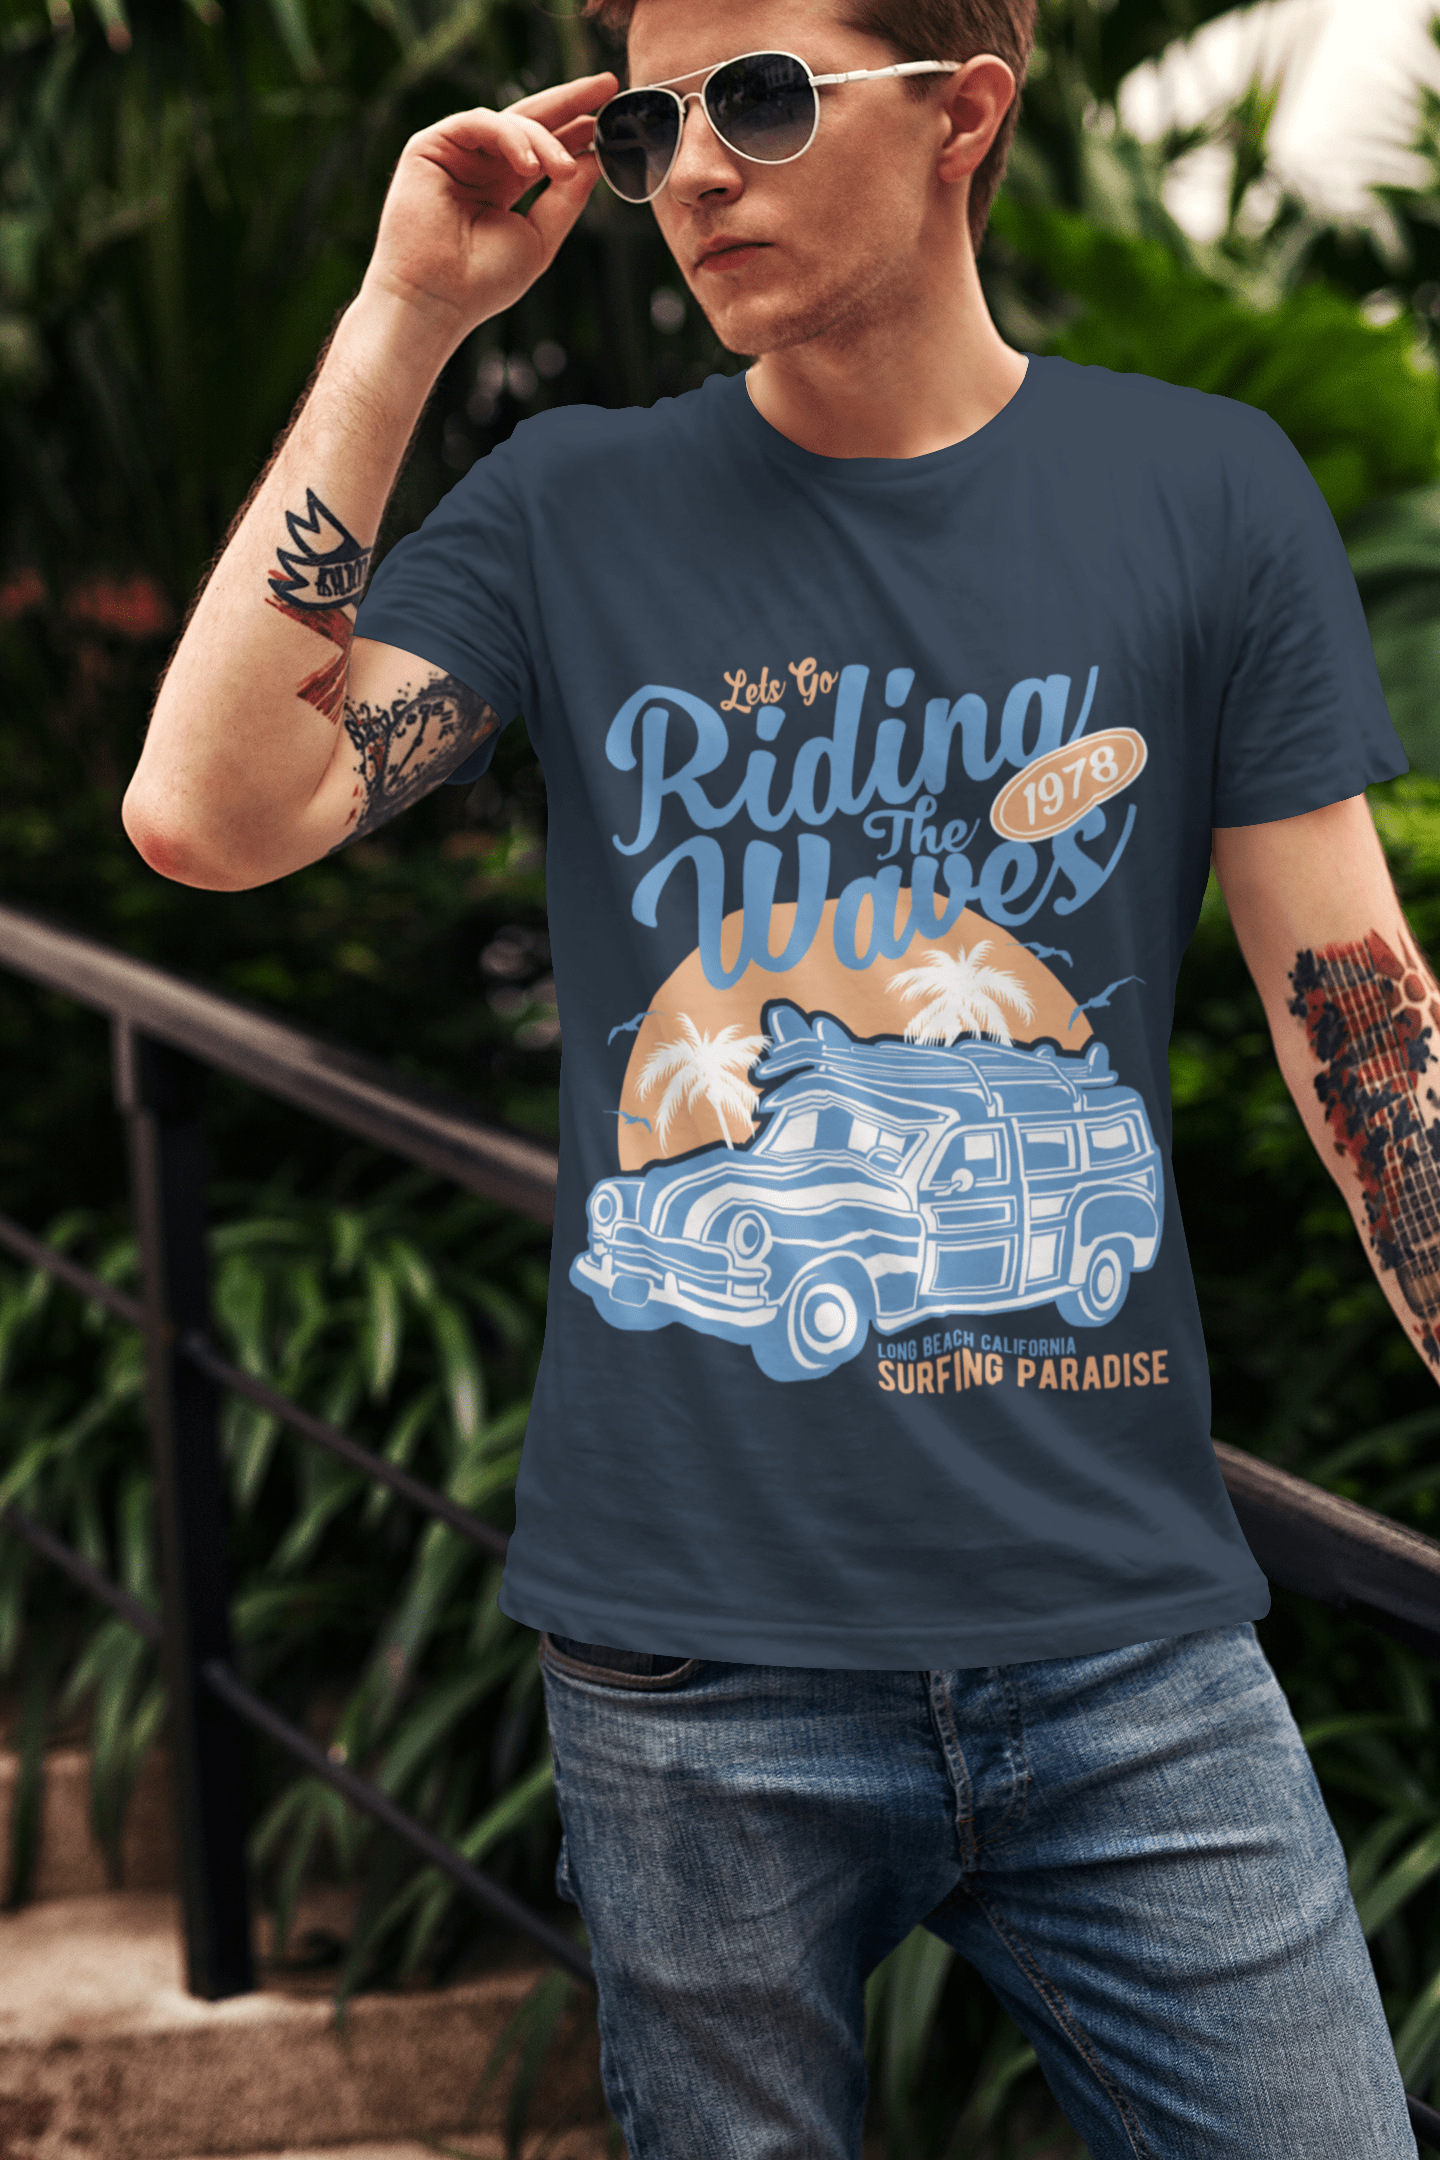 ULTRABASIC Herren T-Shirt Lets Go Riding Waves 1978 – Surf-T-Shirt für Surfer